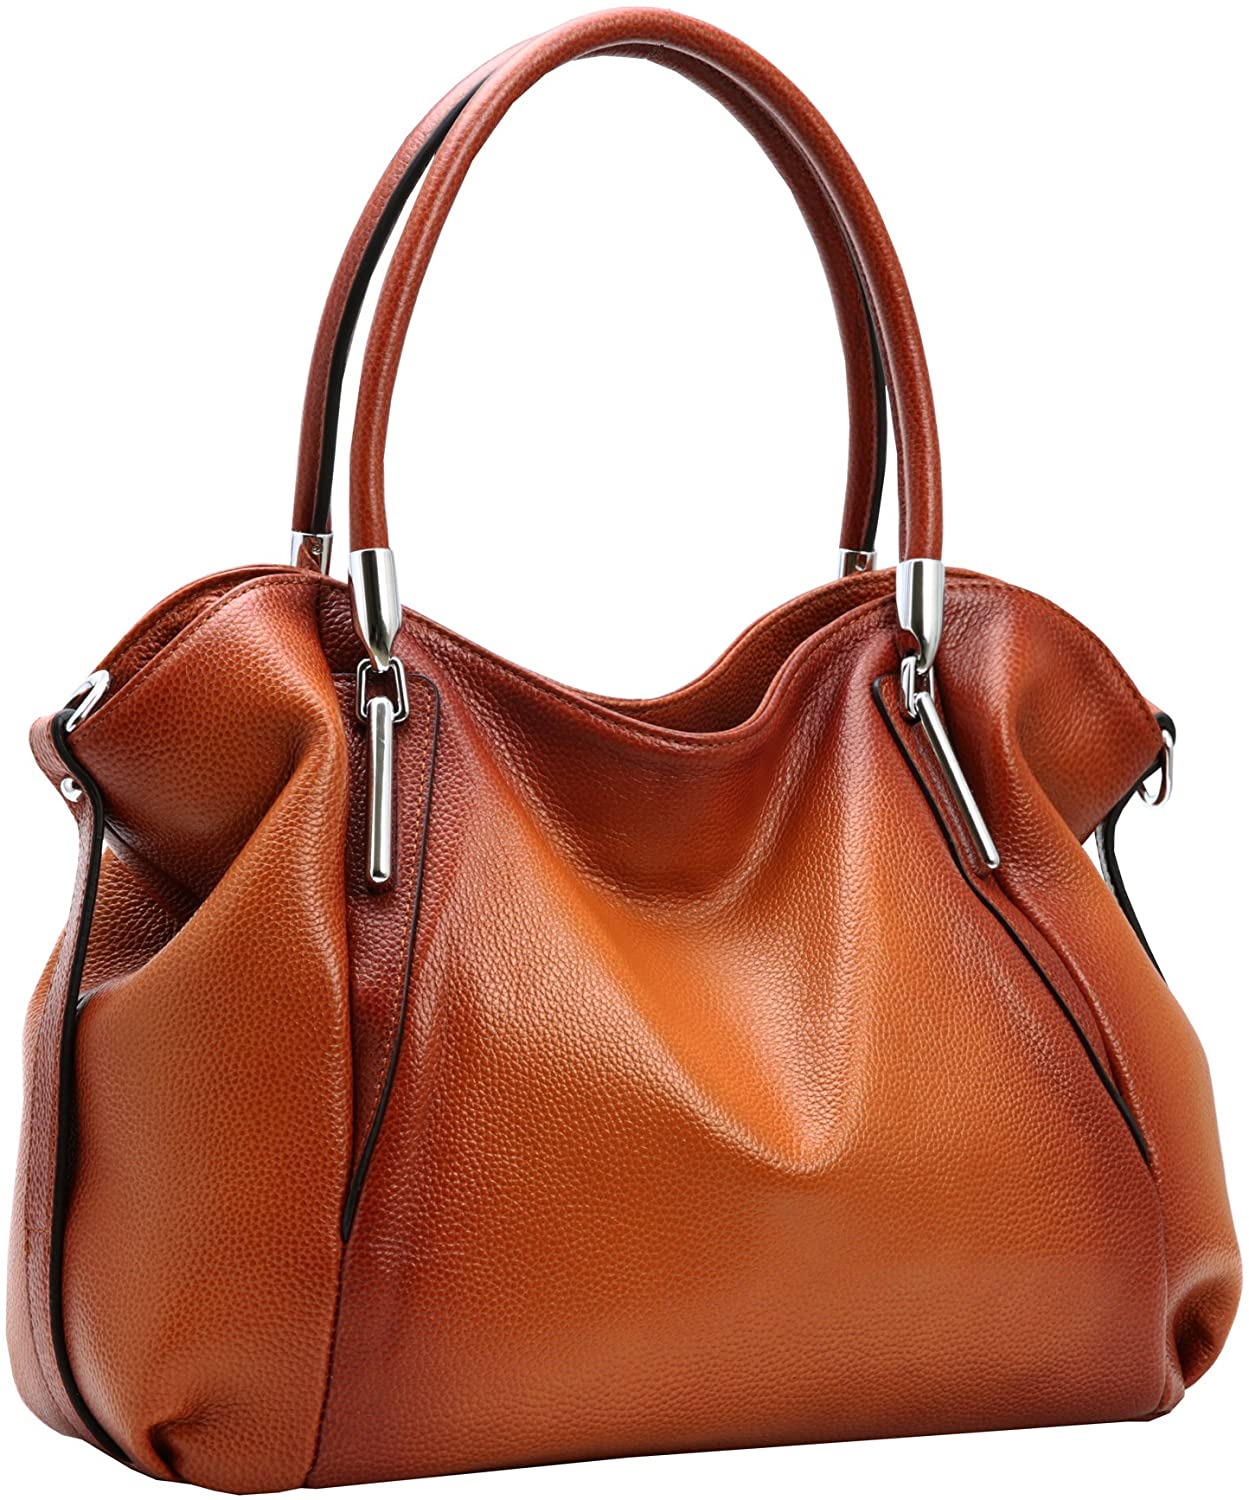 Heshe Womens Multi-color Shoulder Bag Hobo Tote Handbag Cross Body Purse 